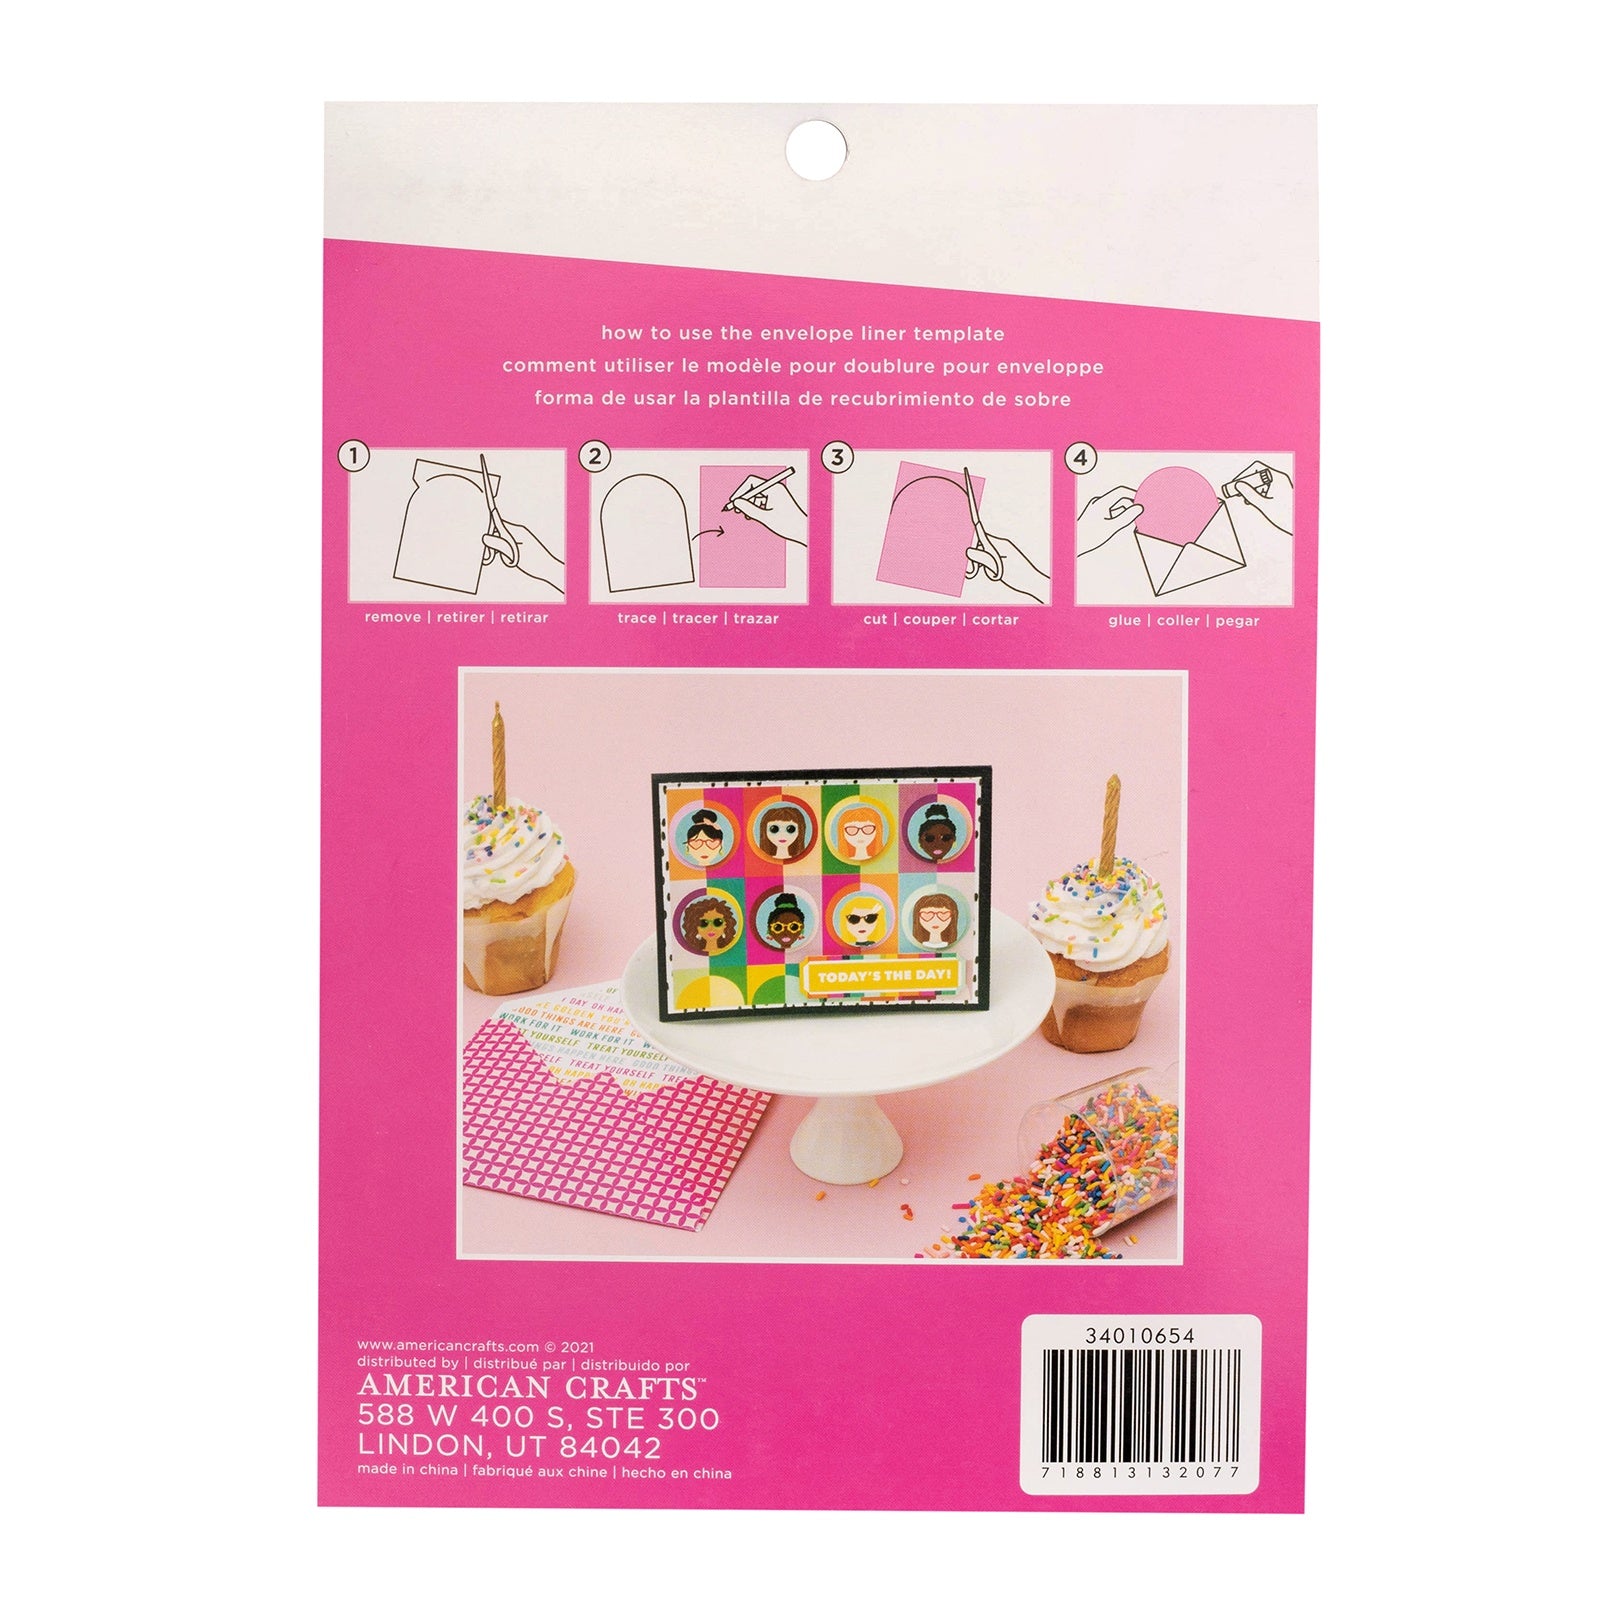 American Crafts Jen Hadfield Flower Child 6 x 8 Paper Pad 34014147